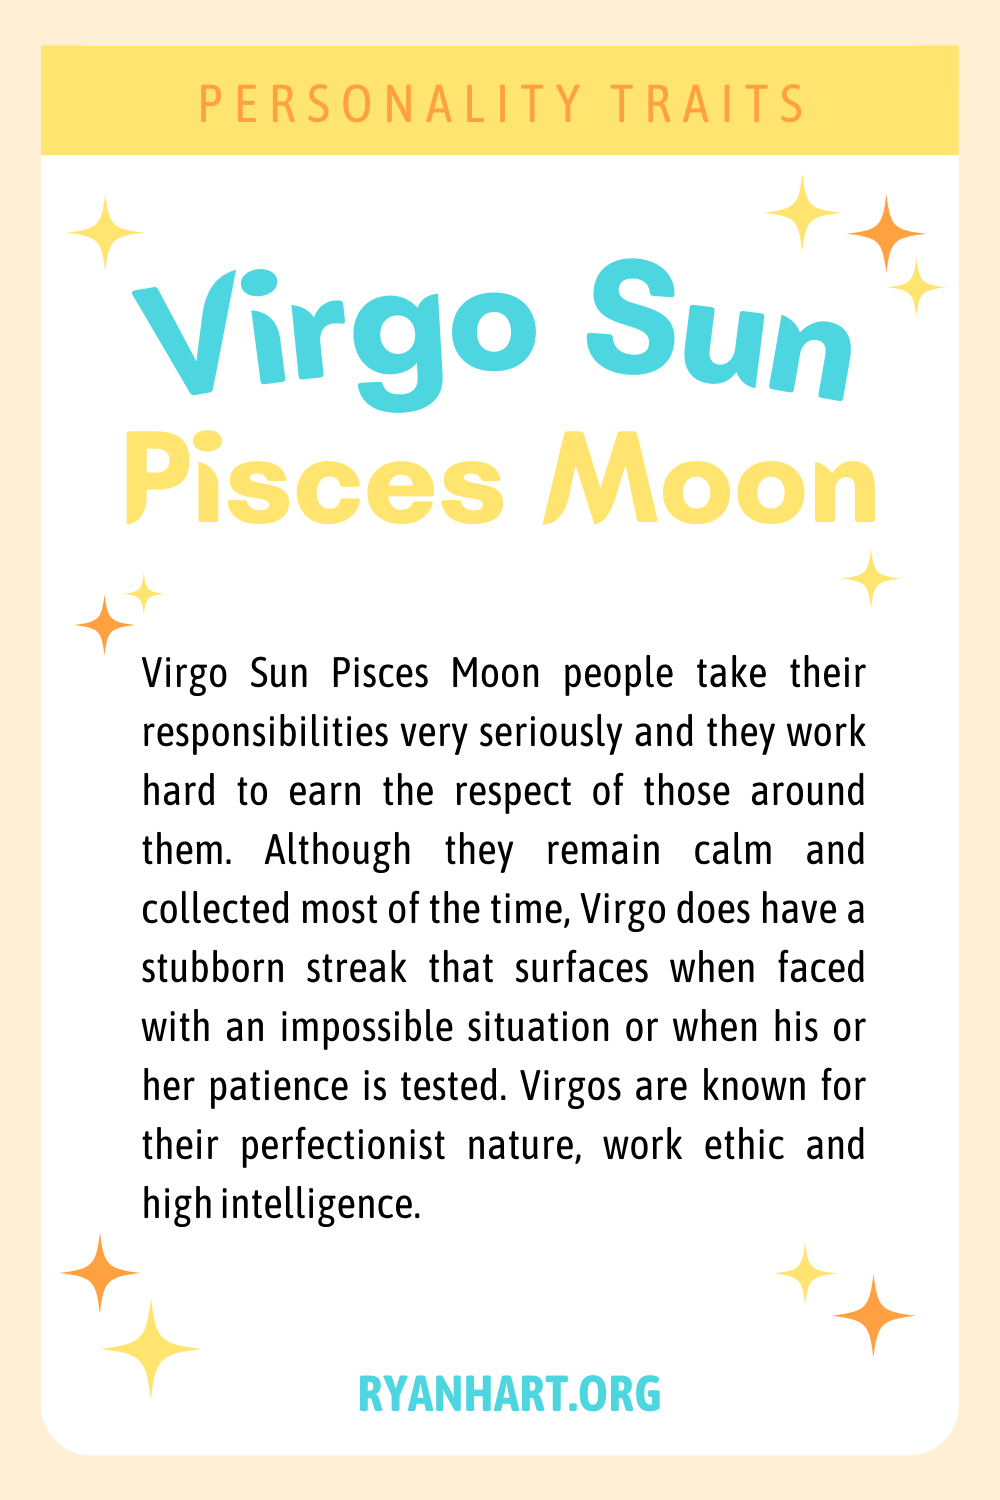 Virgo Sun Pisces Moon Description